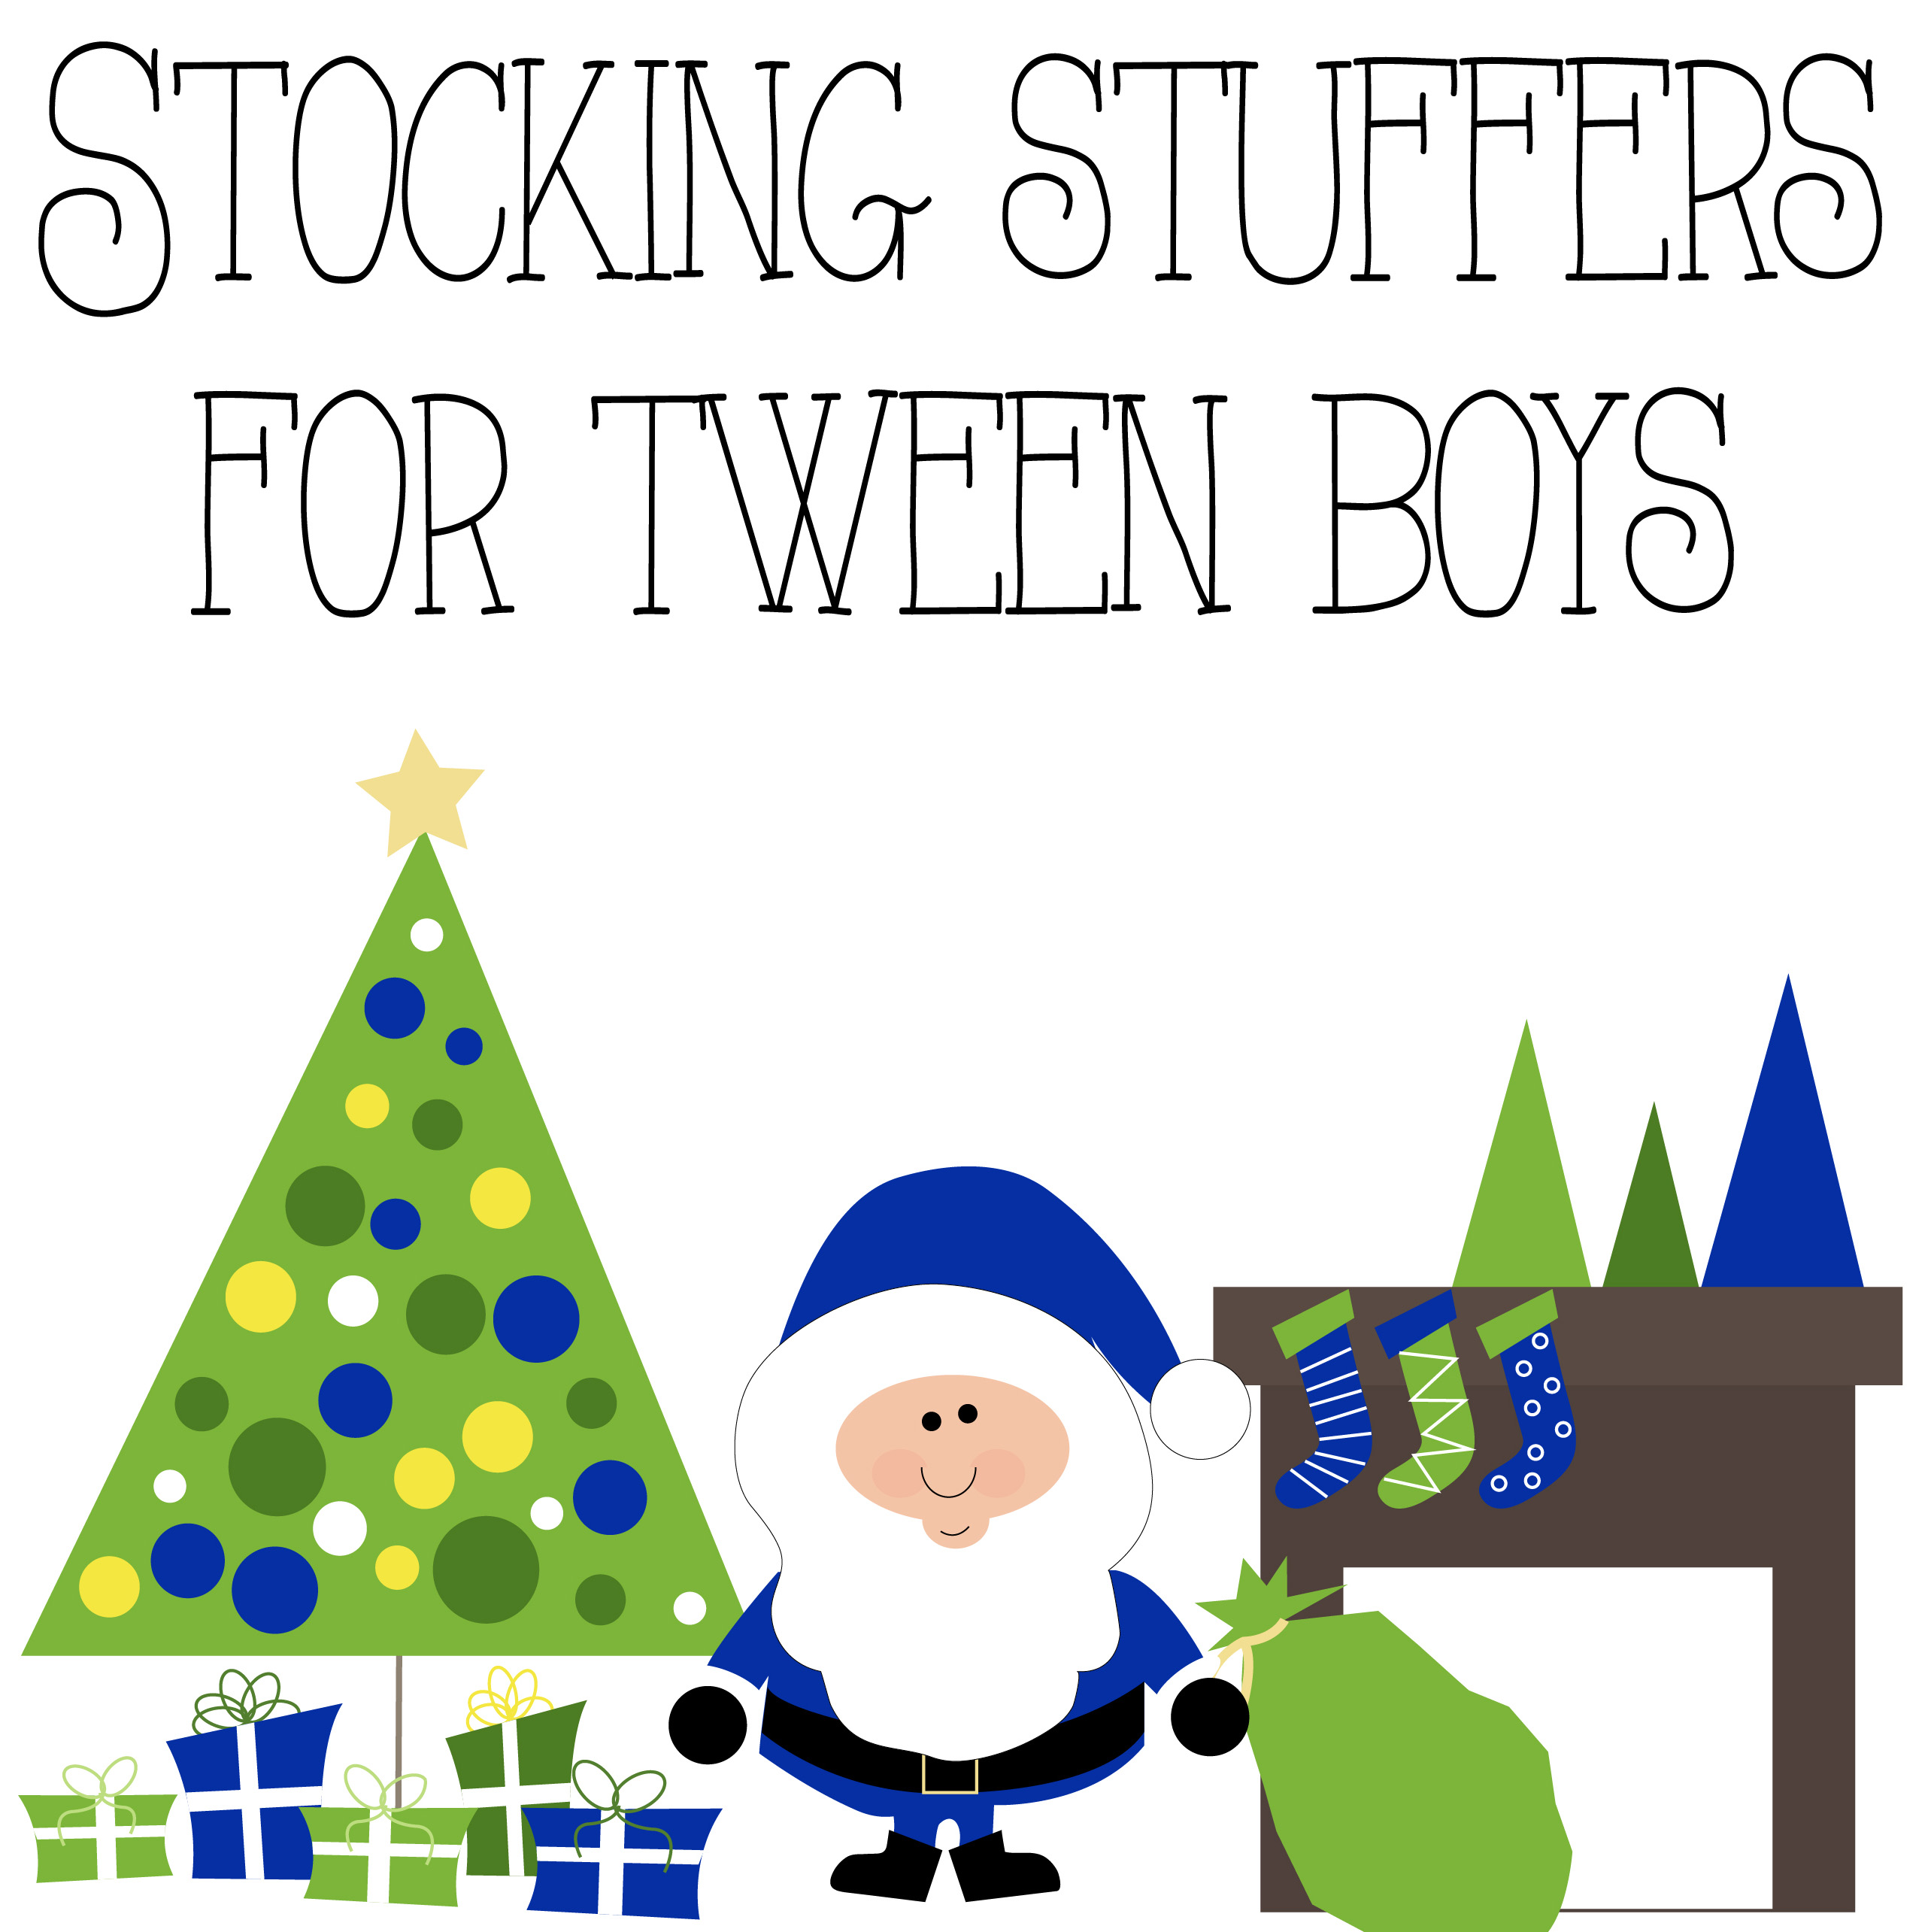 boys in stocking